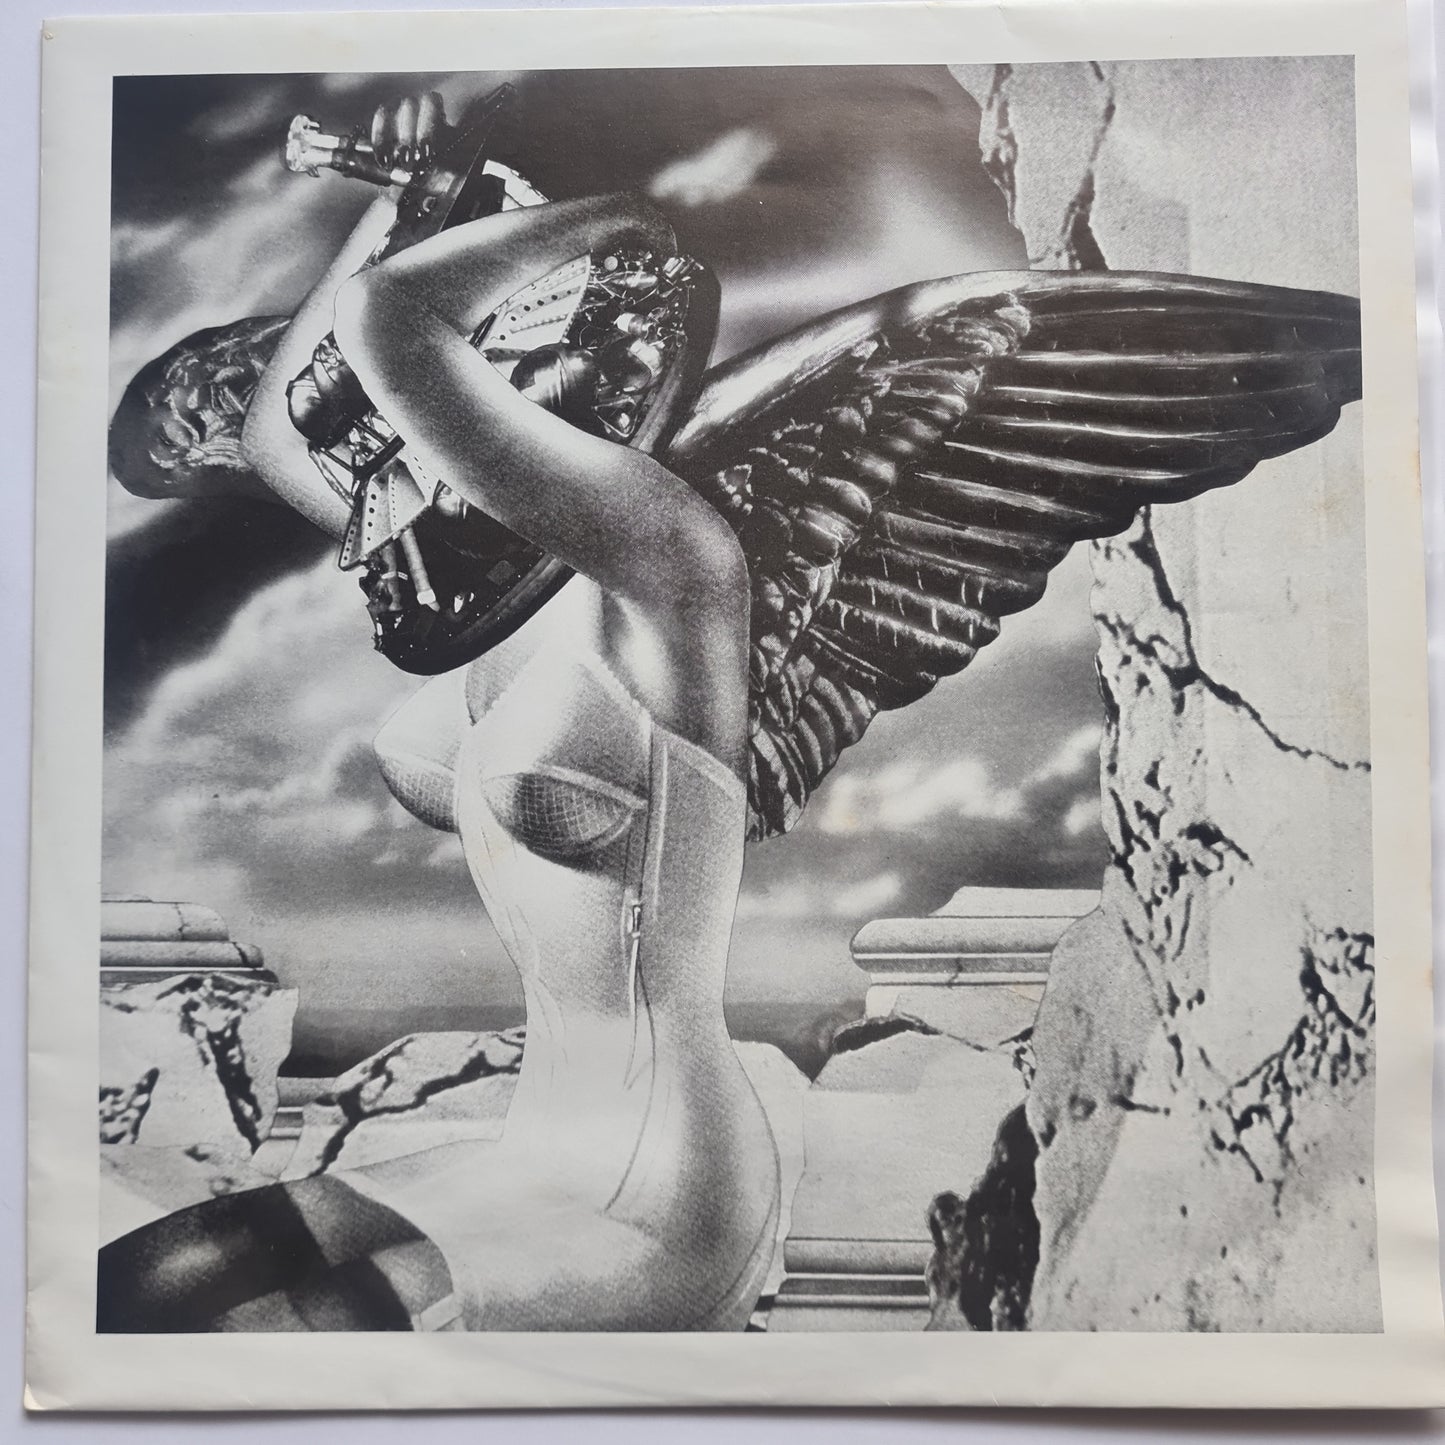 The Angels – Beyond Salvation - 1990 (2LP) - Vinyl Record